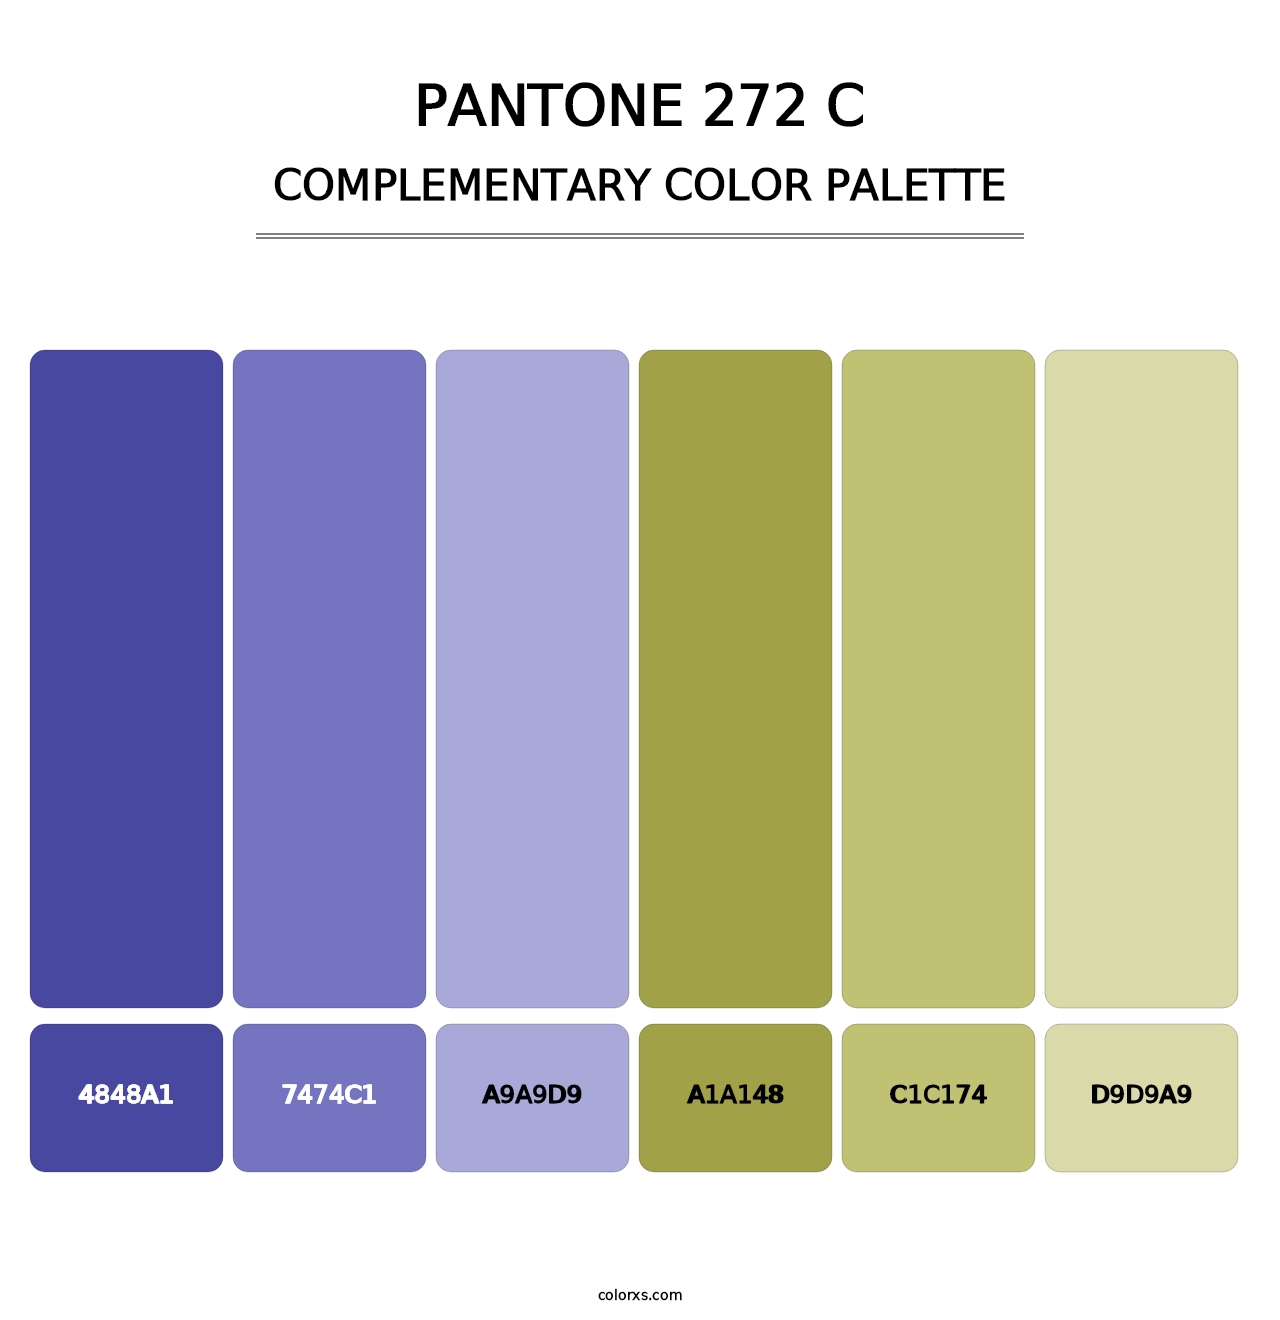 PANTONE 272 C - Complementary Color Palette